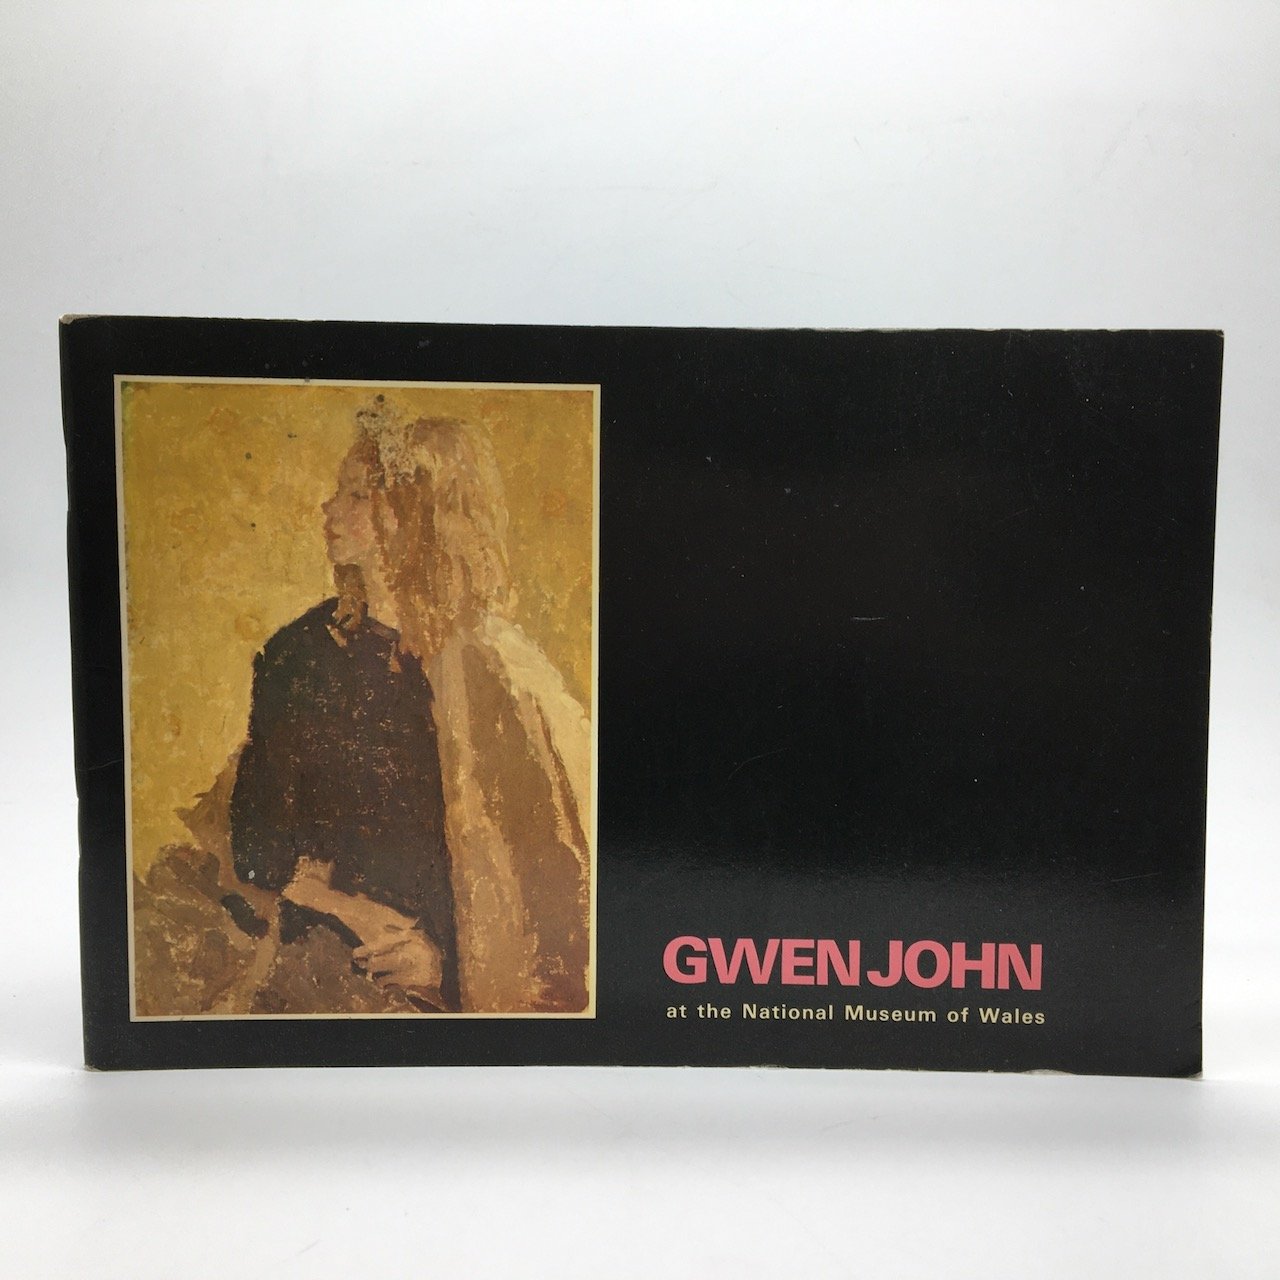 GWEN JOHN AT THE NATIONAL MUSEUM OF WALES. - JOHN, Gwen.